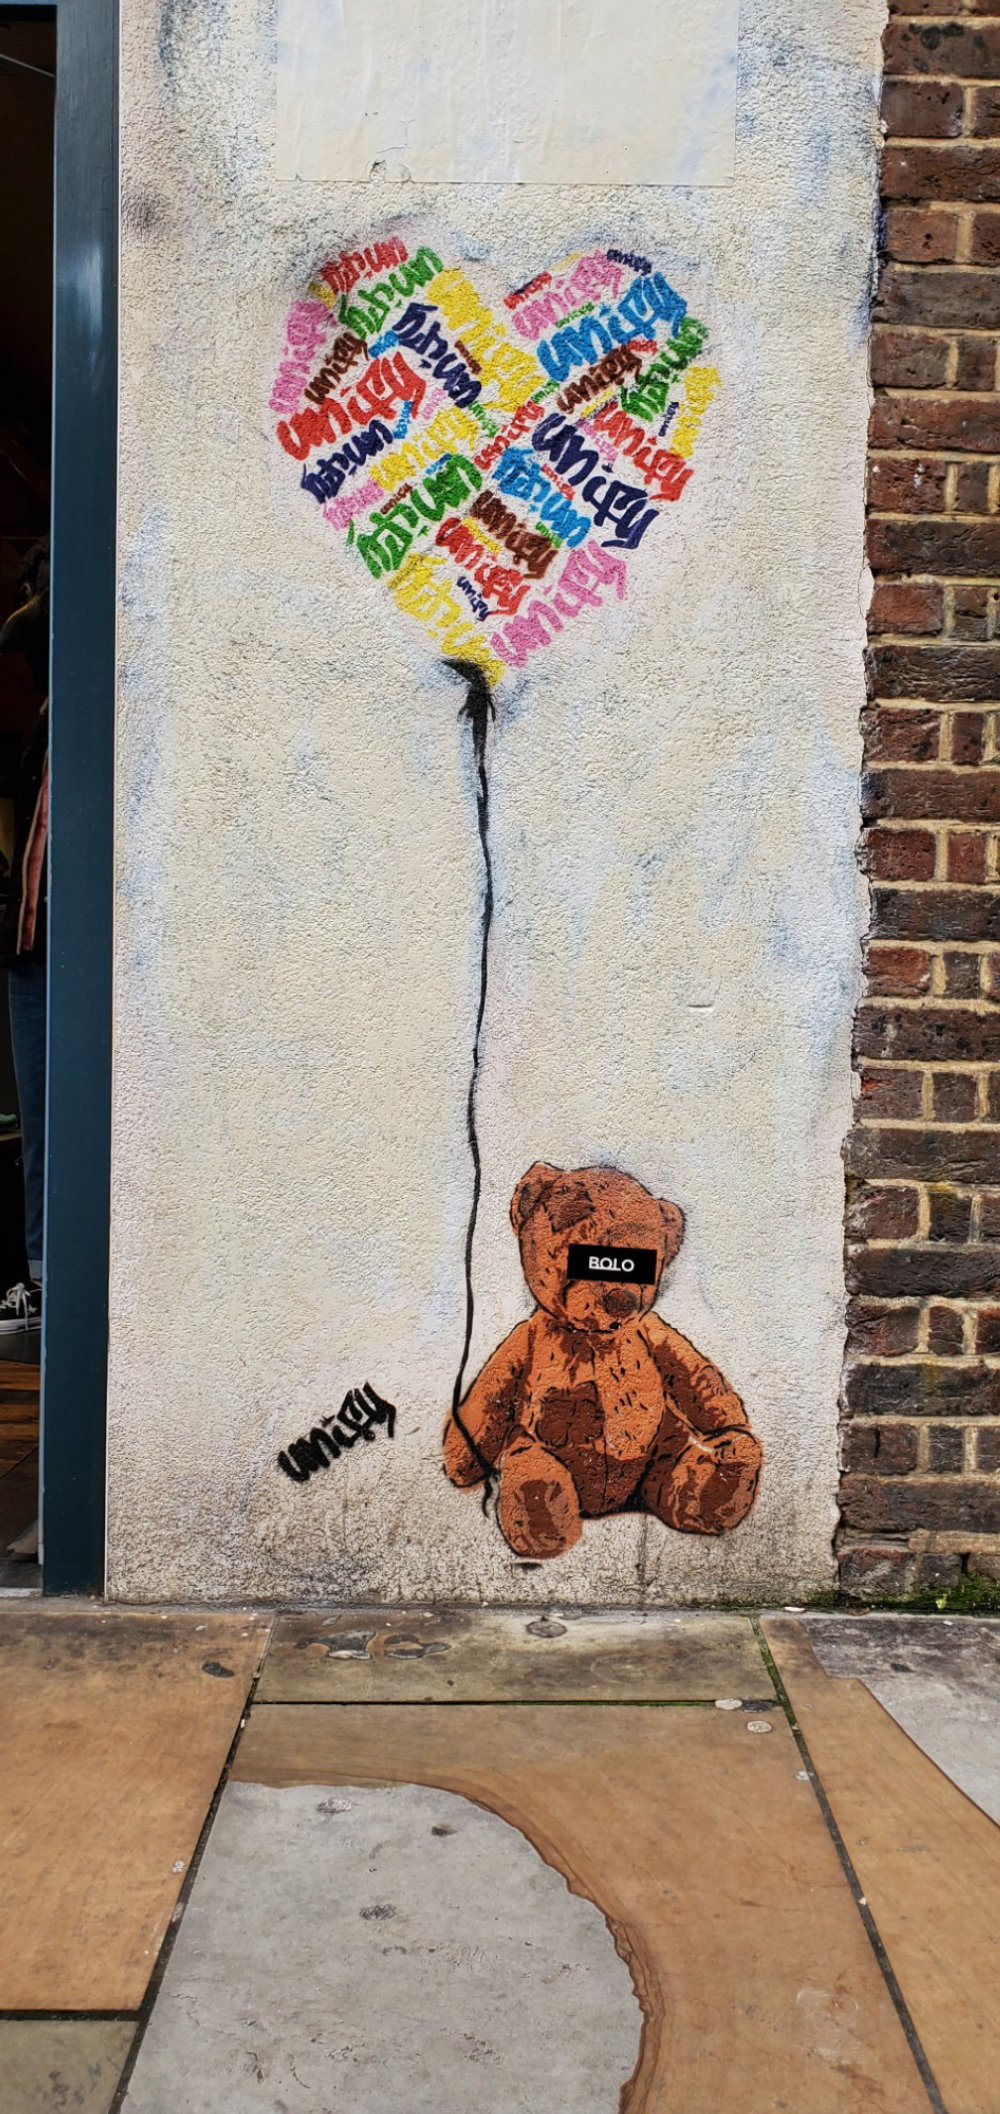 mural in London by artist Unify.